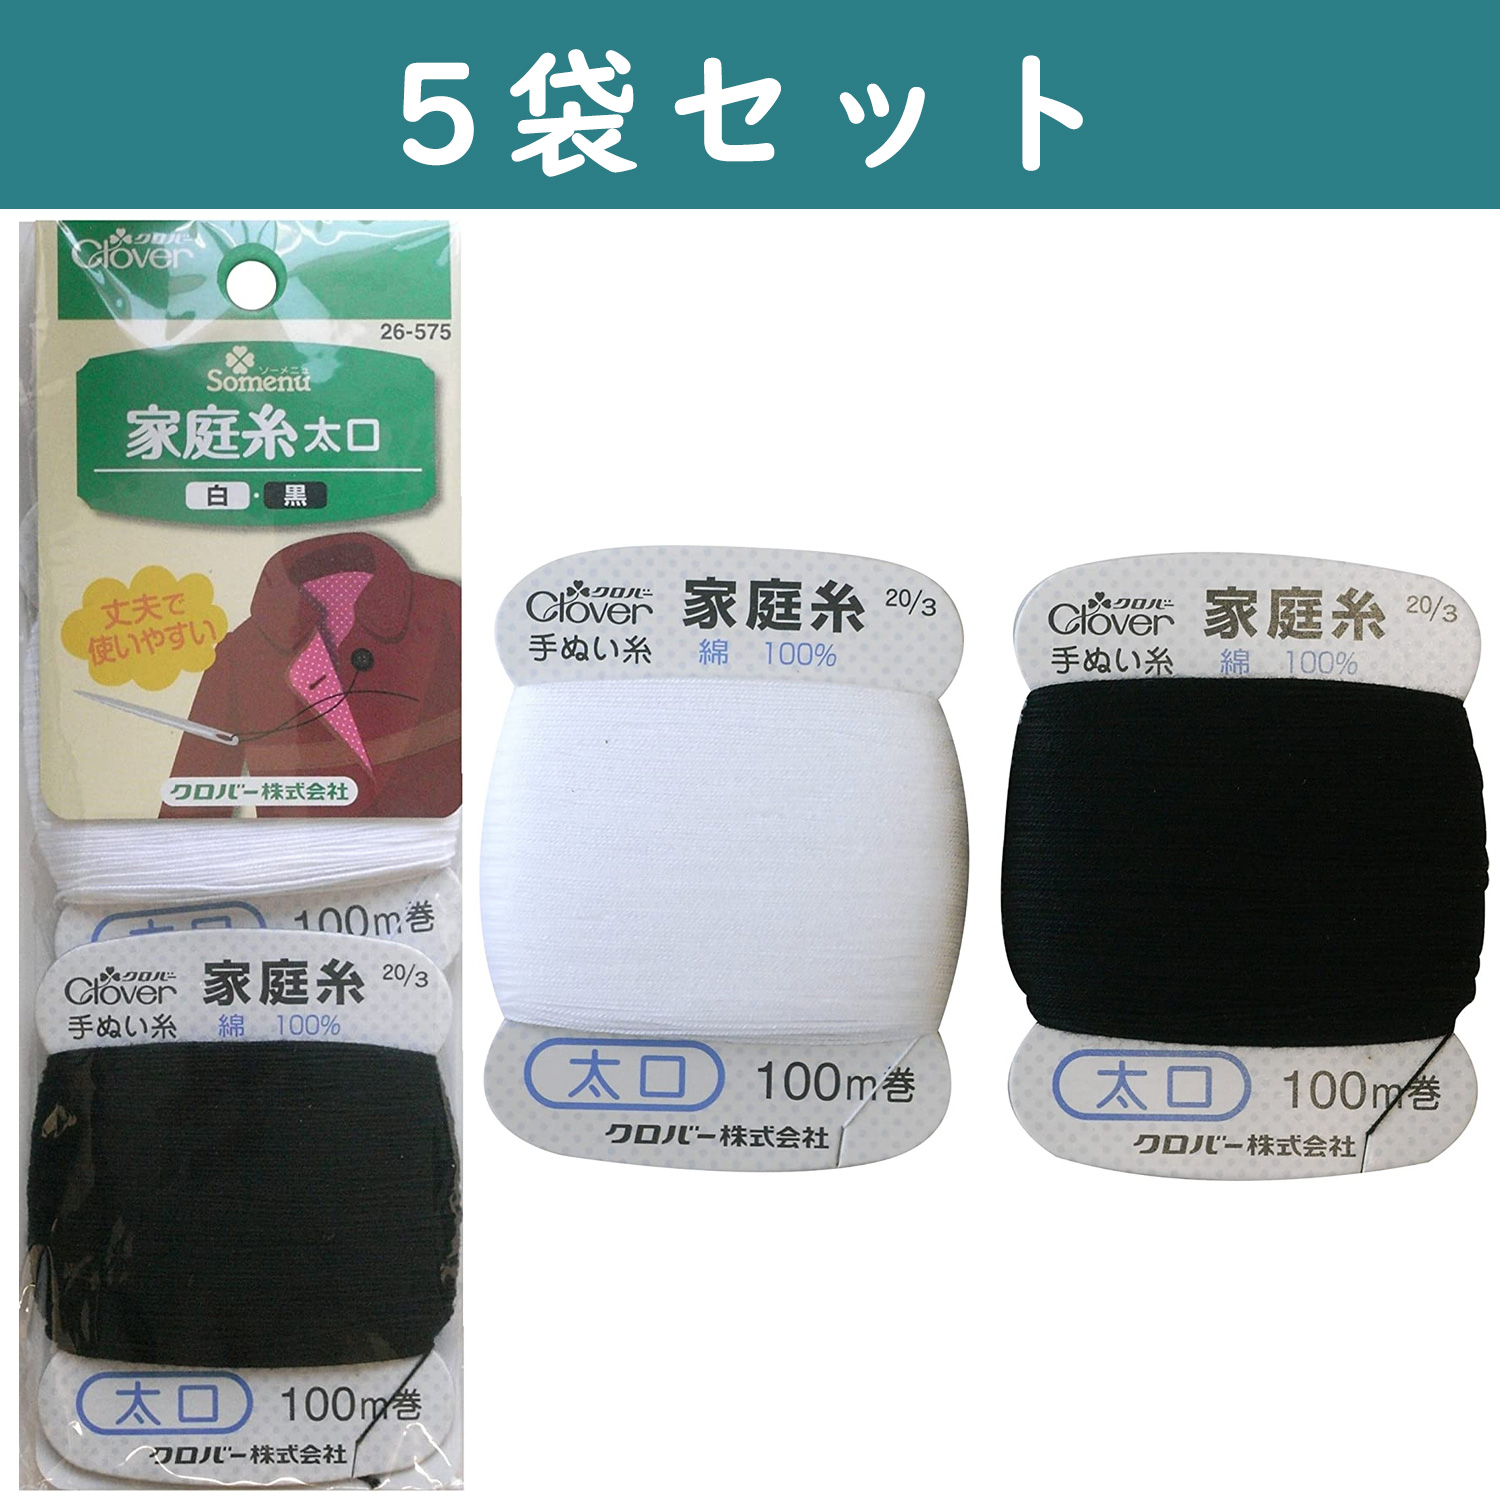 ■【5個】CL26-575-5set 家庭糸 太口 100m巻 各1個入り 白・黒 ×5個　(セット)